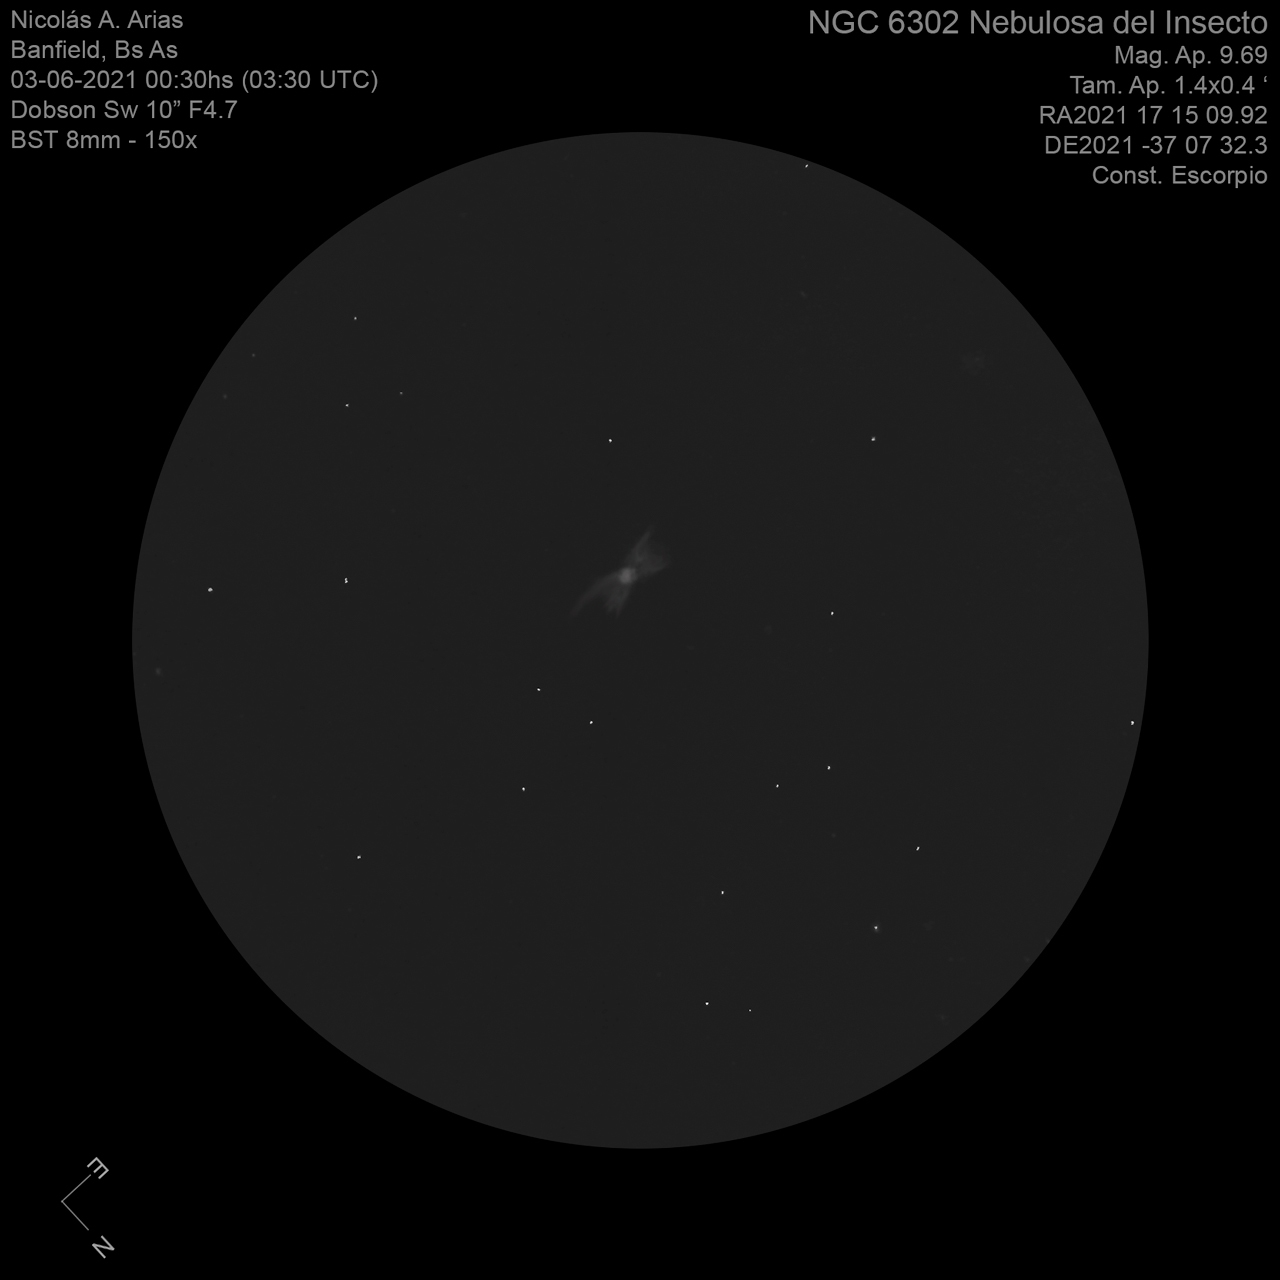 NGC6302-Nebulosa-del-Insecto-3-6-2021-150x.jpg.5f25fba670894d8a6493cbc5efea39af.jpg